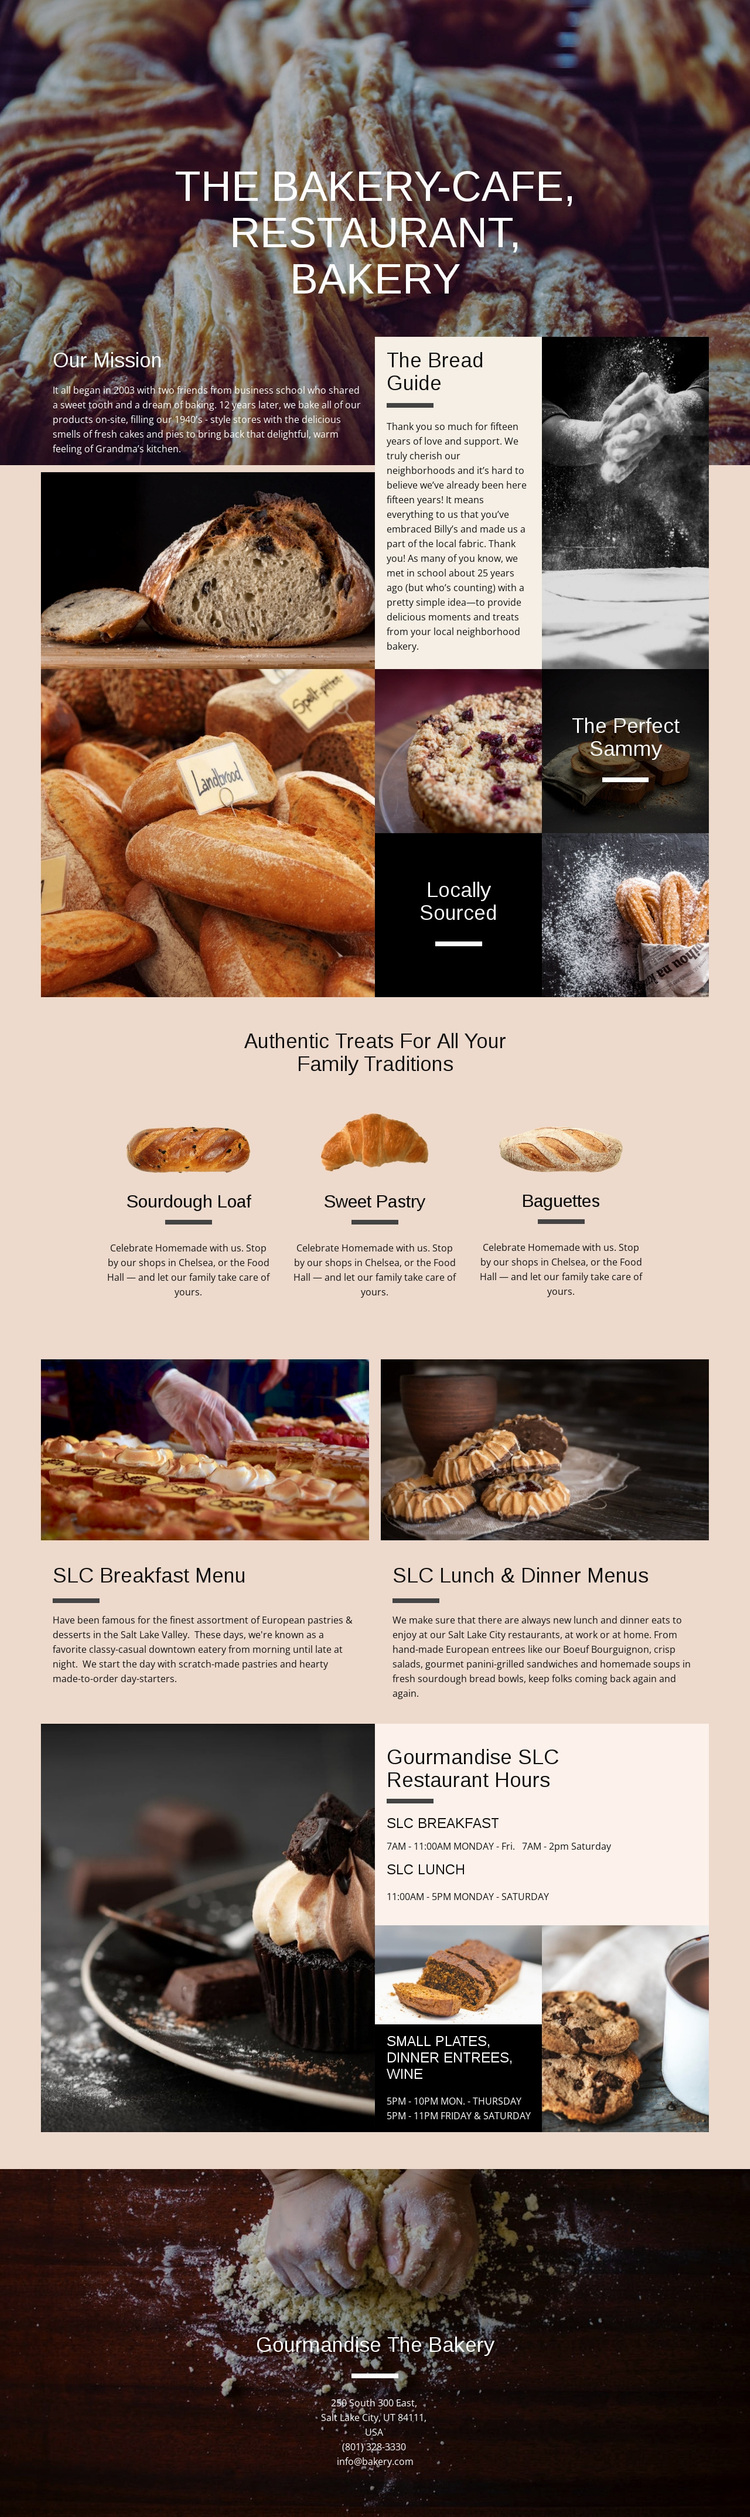 The Bakery Website Design